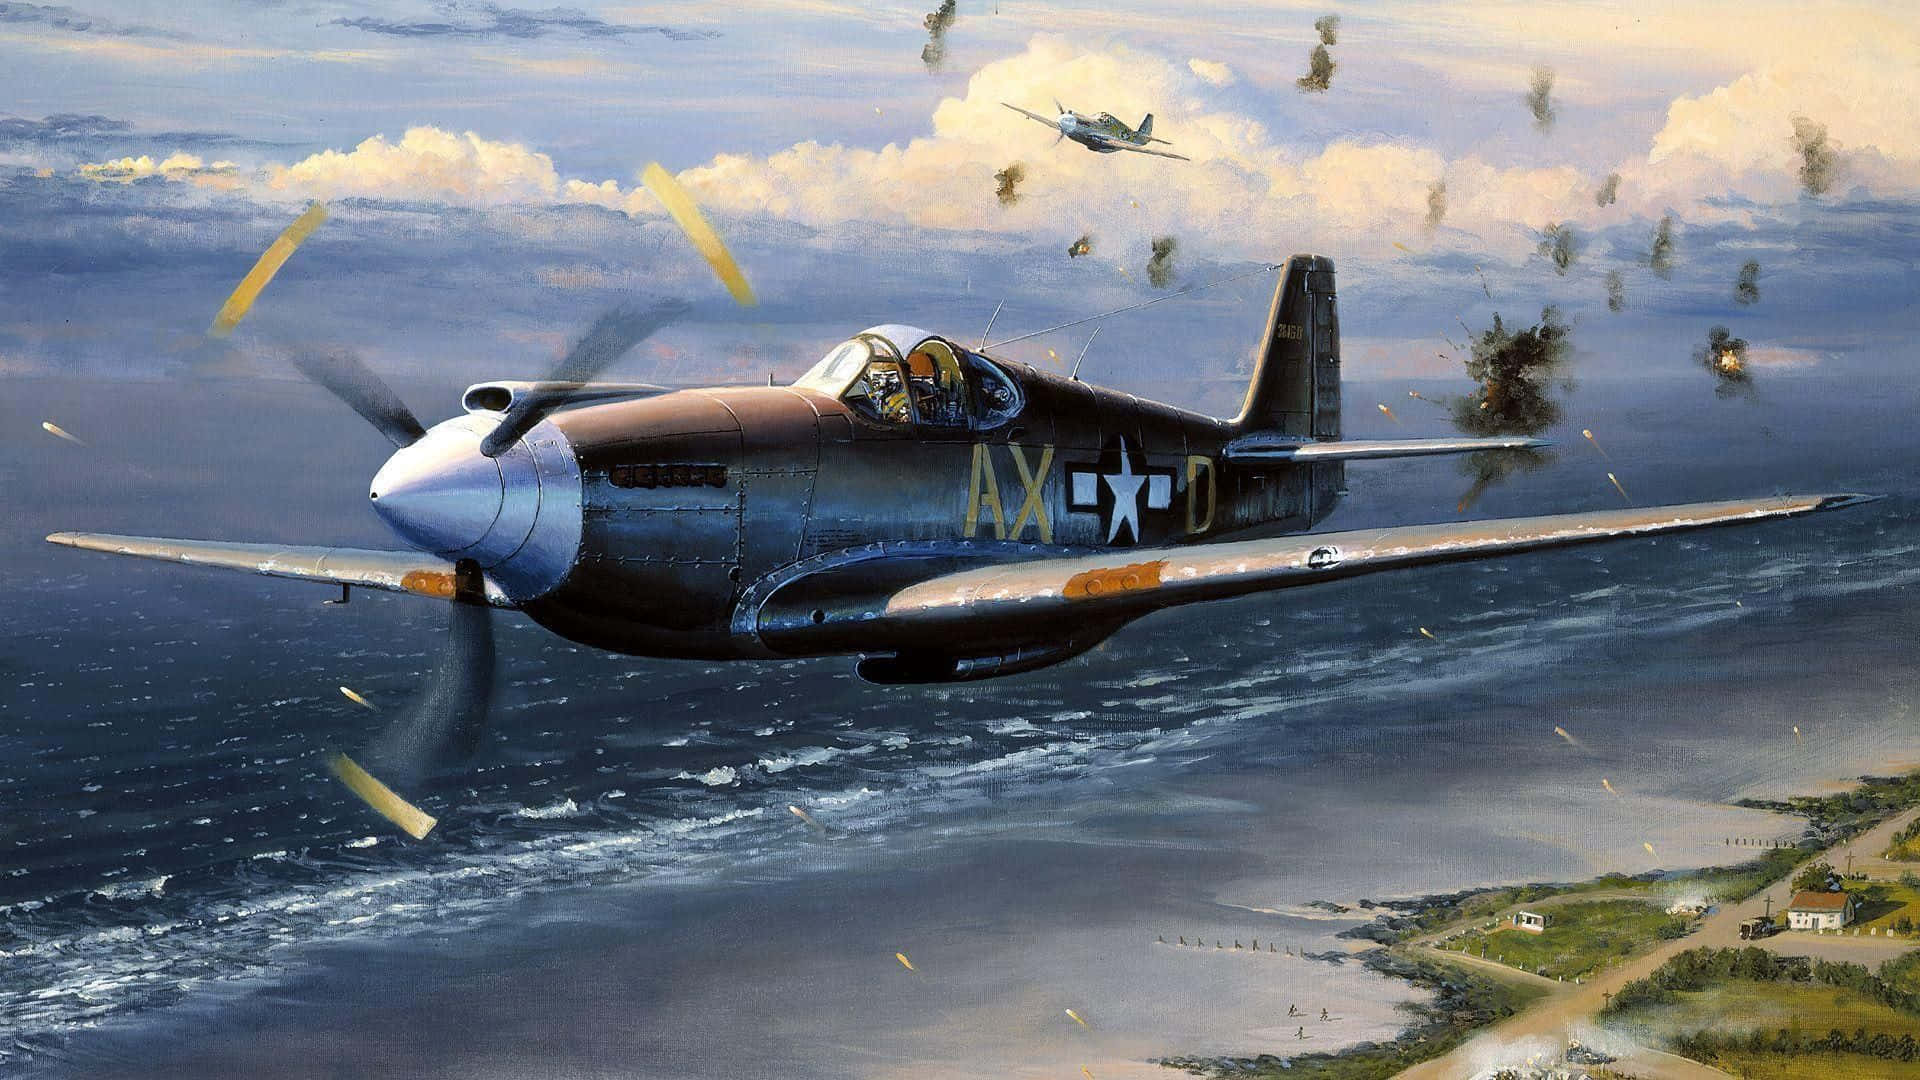 "The Iconic Spitfire Warplane" Wallpaper